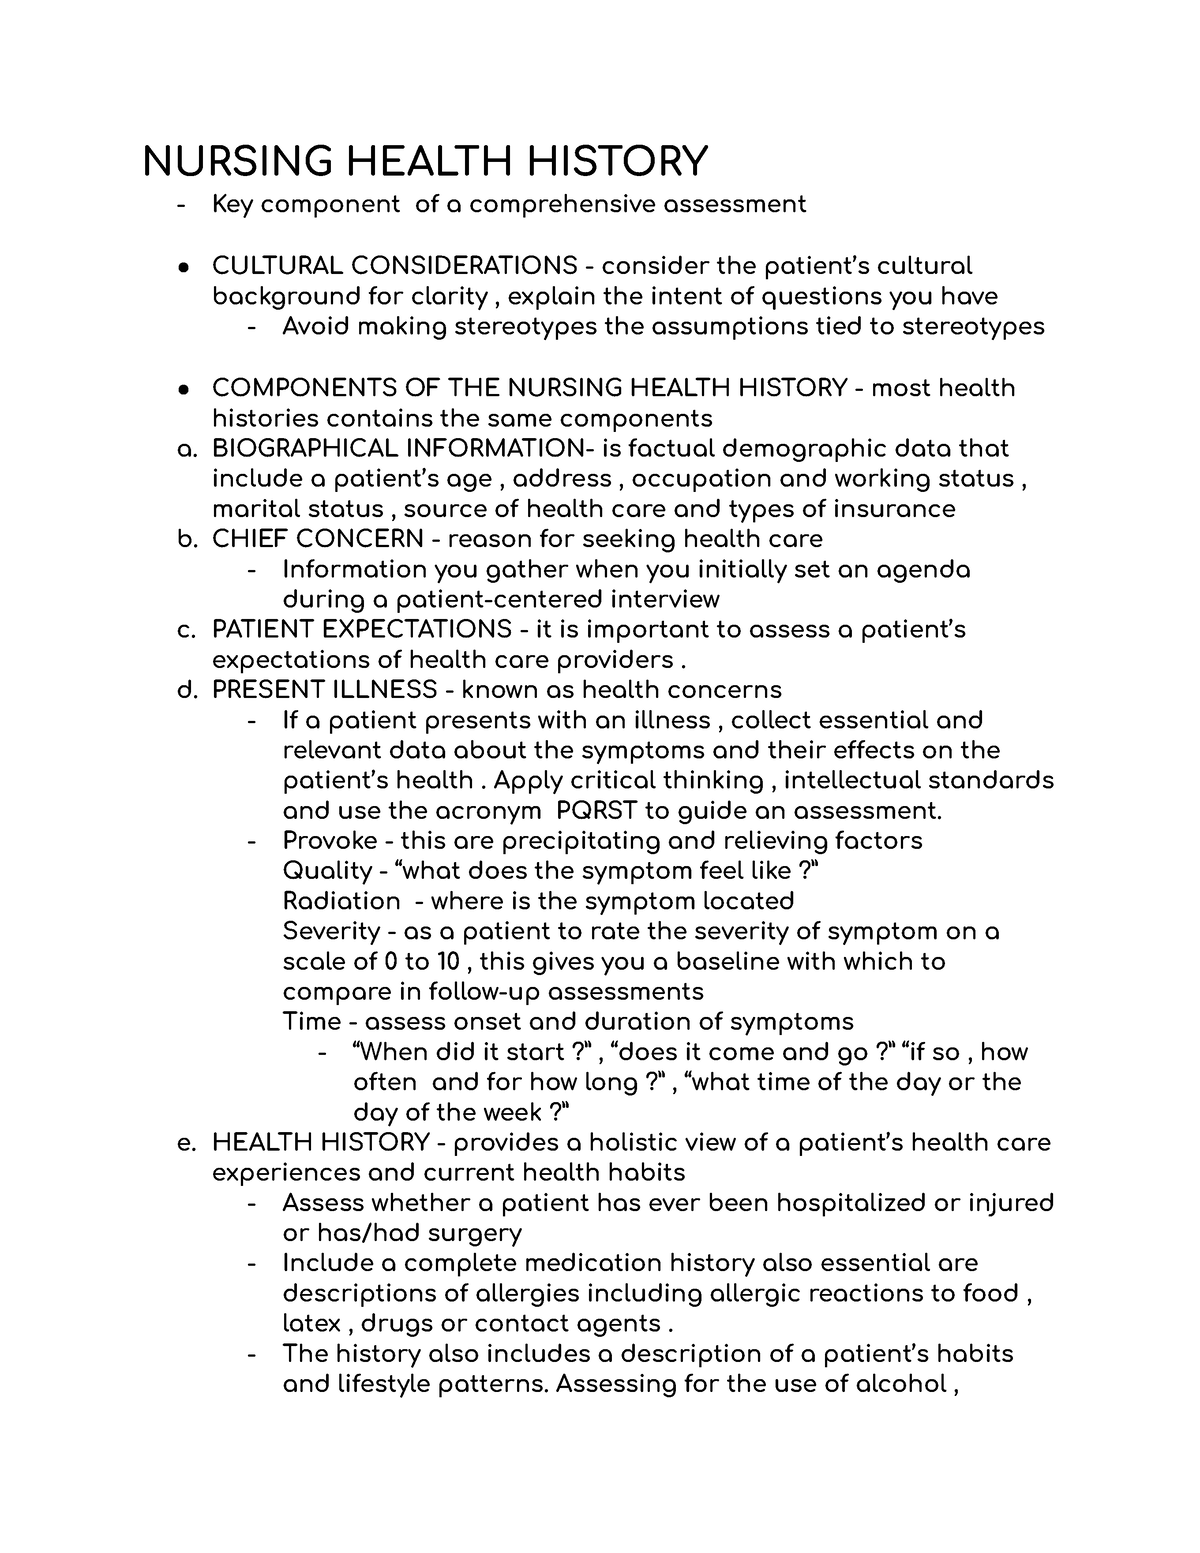 history of nursing research pdf